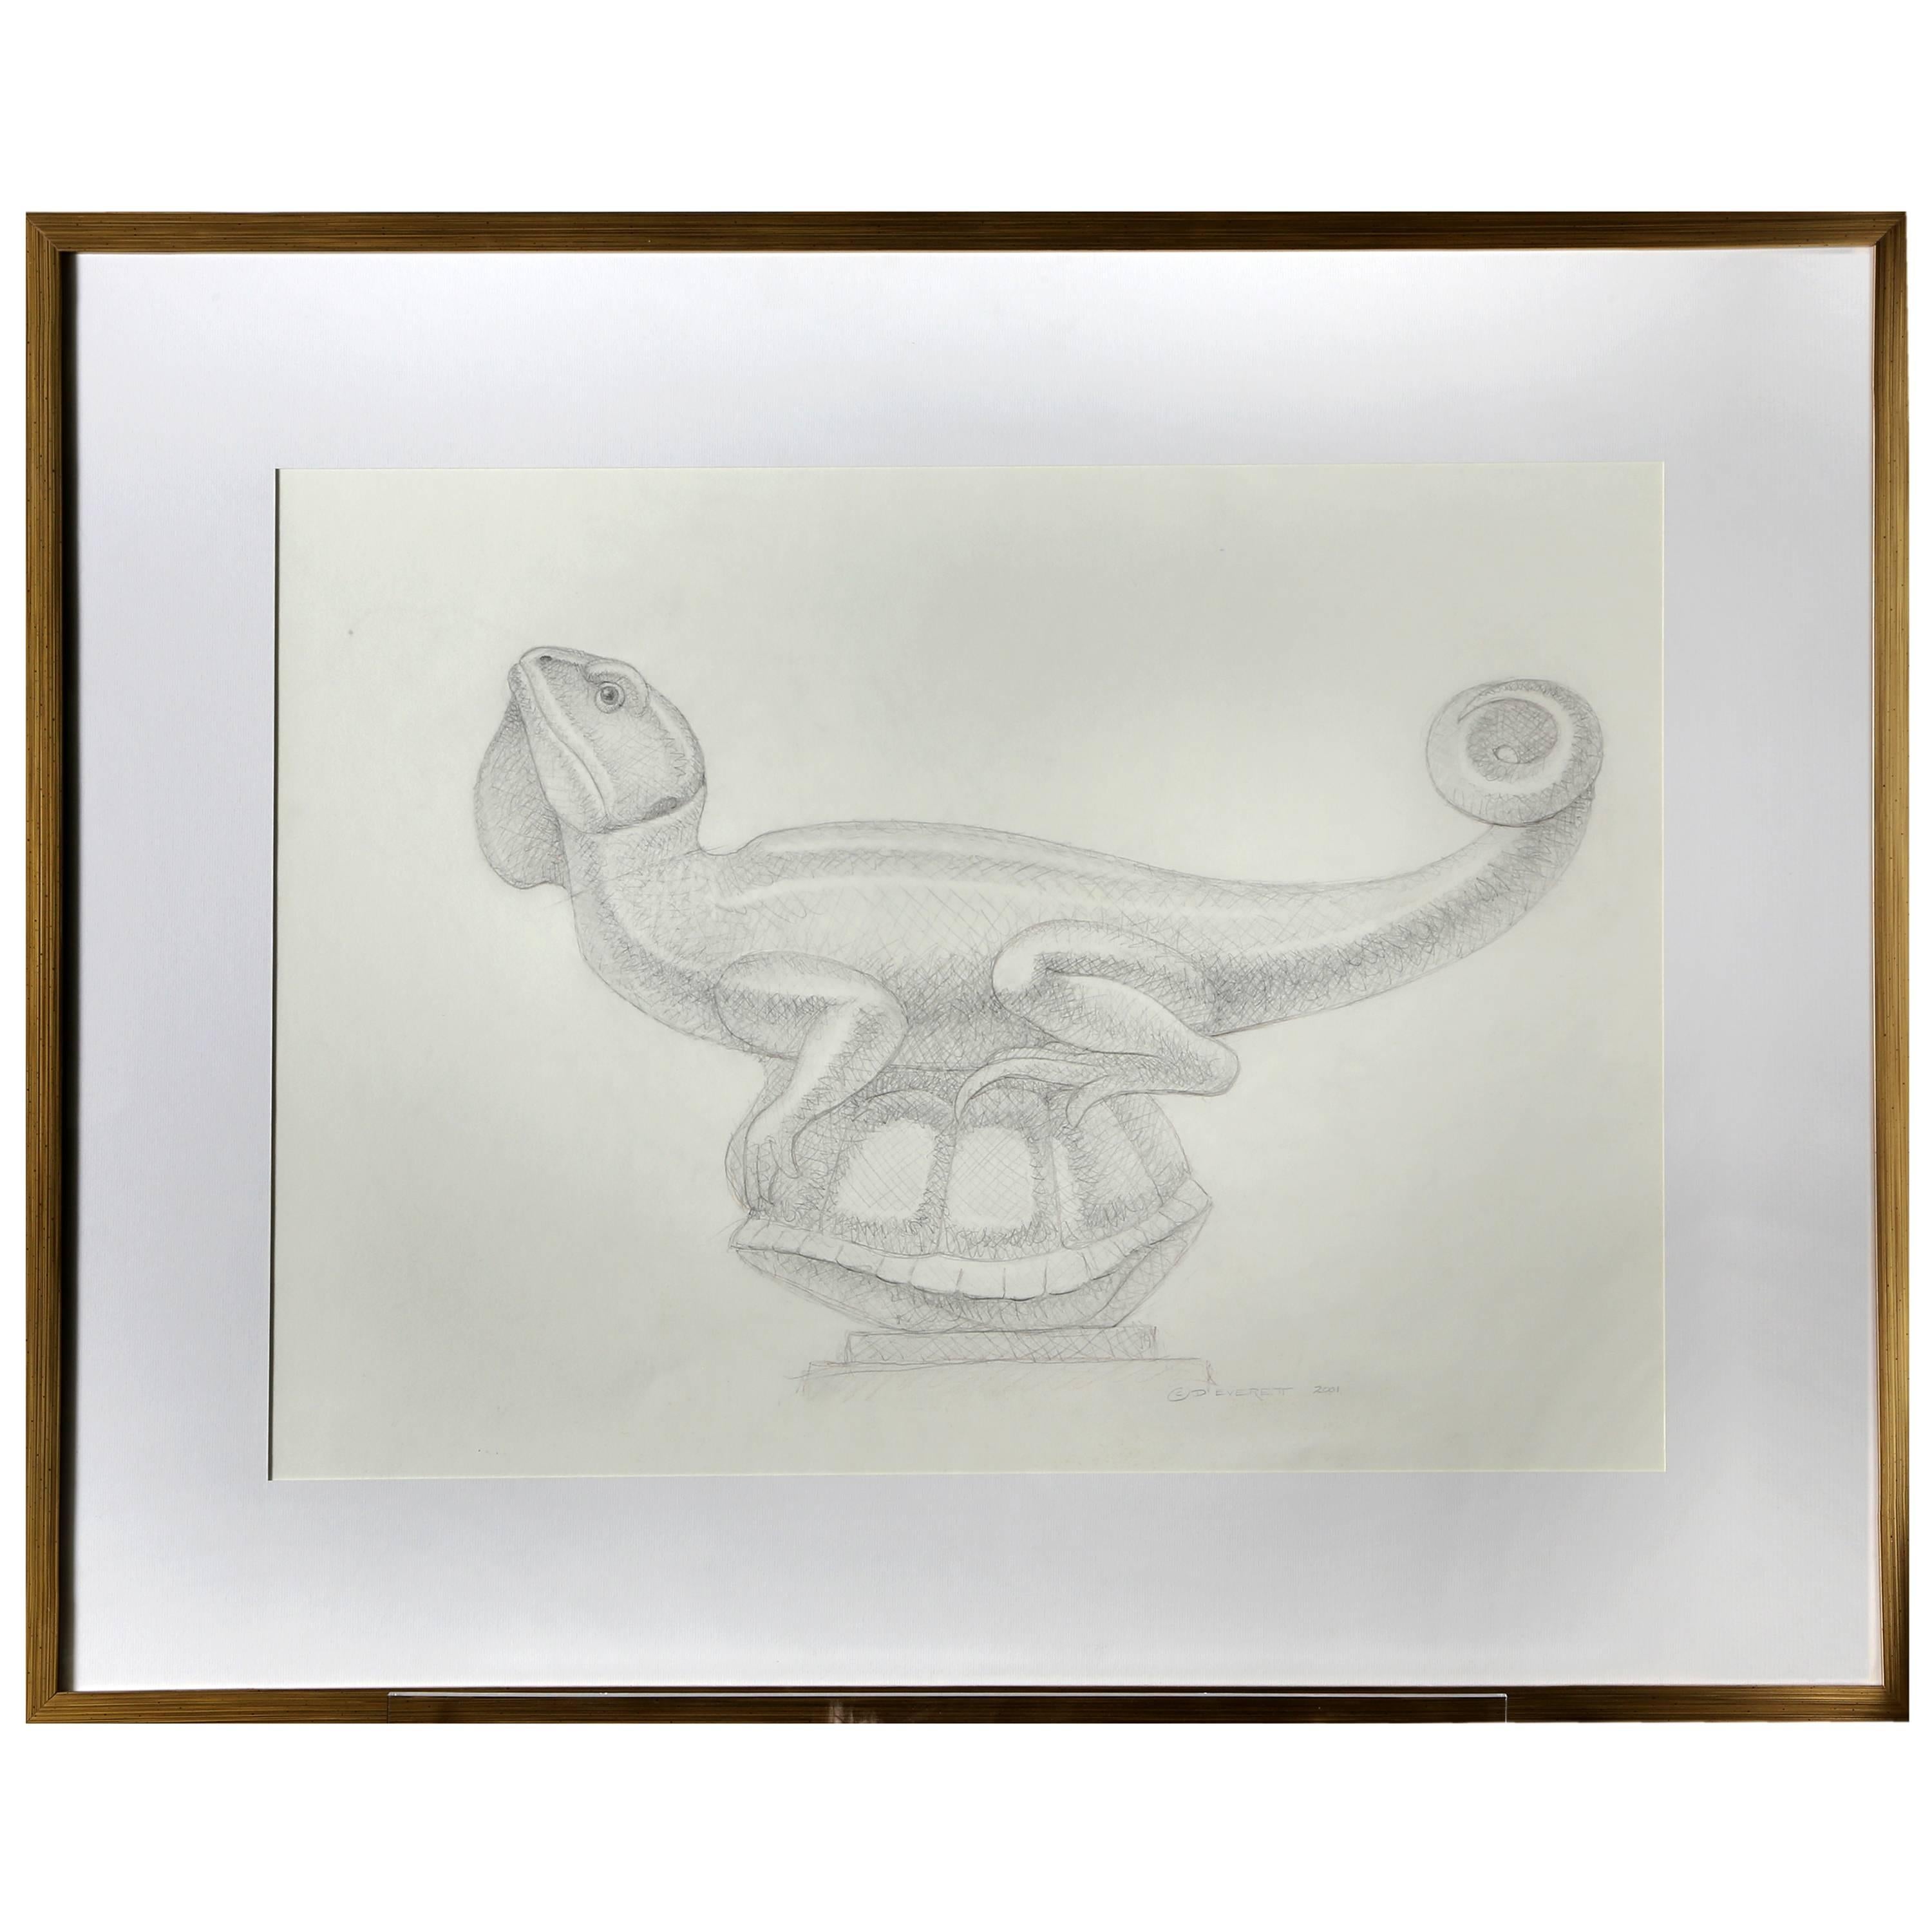 Framed Original Pencil Drawing of an Iguana